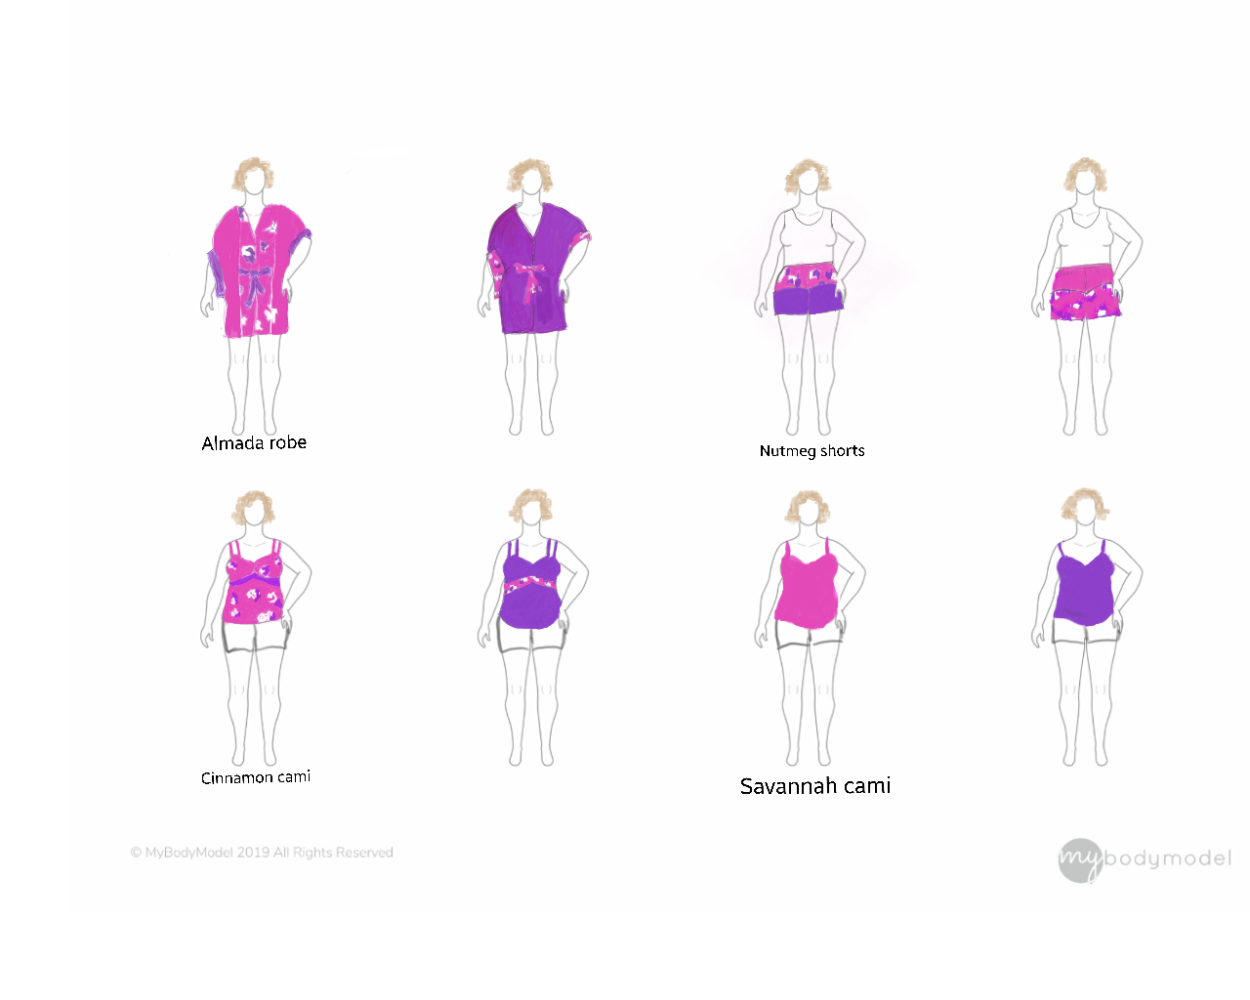 Digital fashion drawing on MyBodyModel 8-croquis per page template: Mini capsule loungewear collection including Almada robe, Nutmeg shorts, Cinnamon cami, and Savannah cami